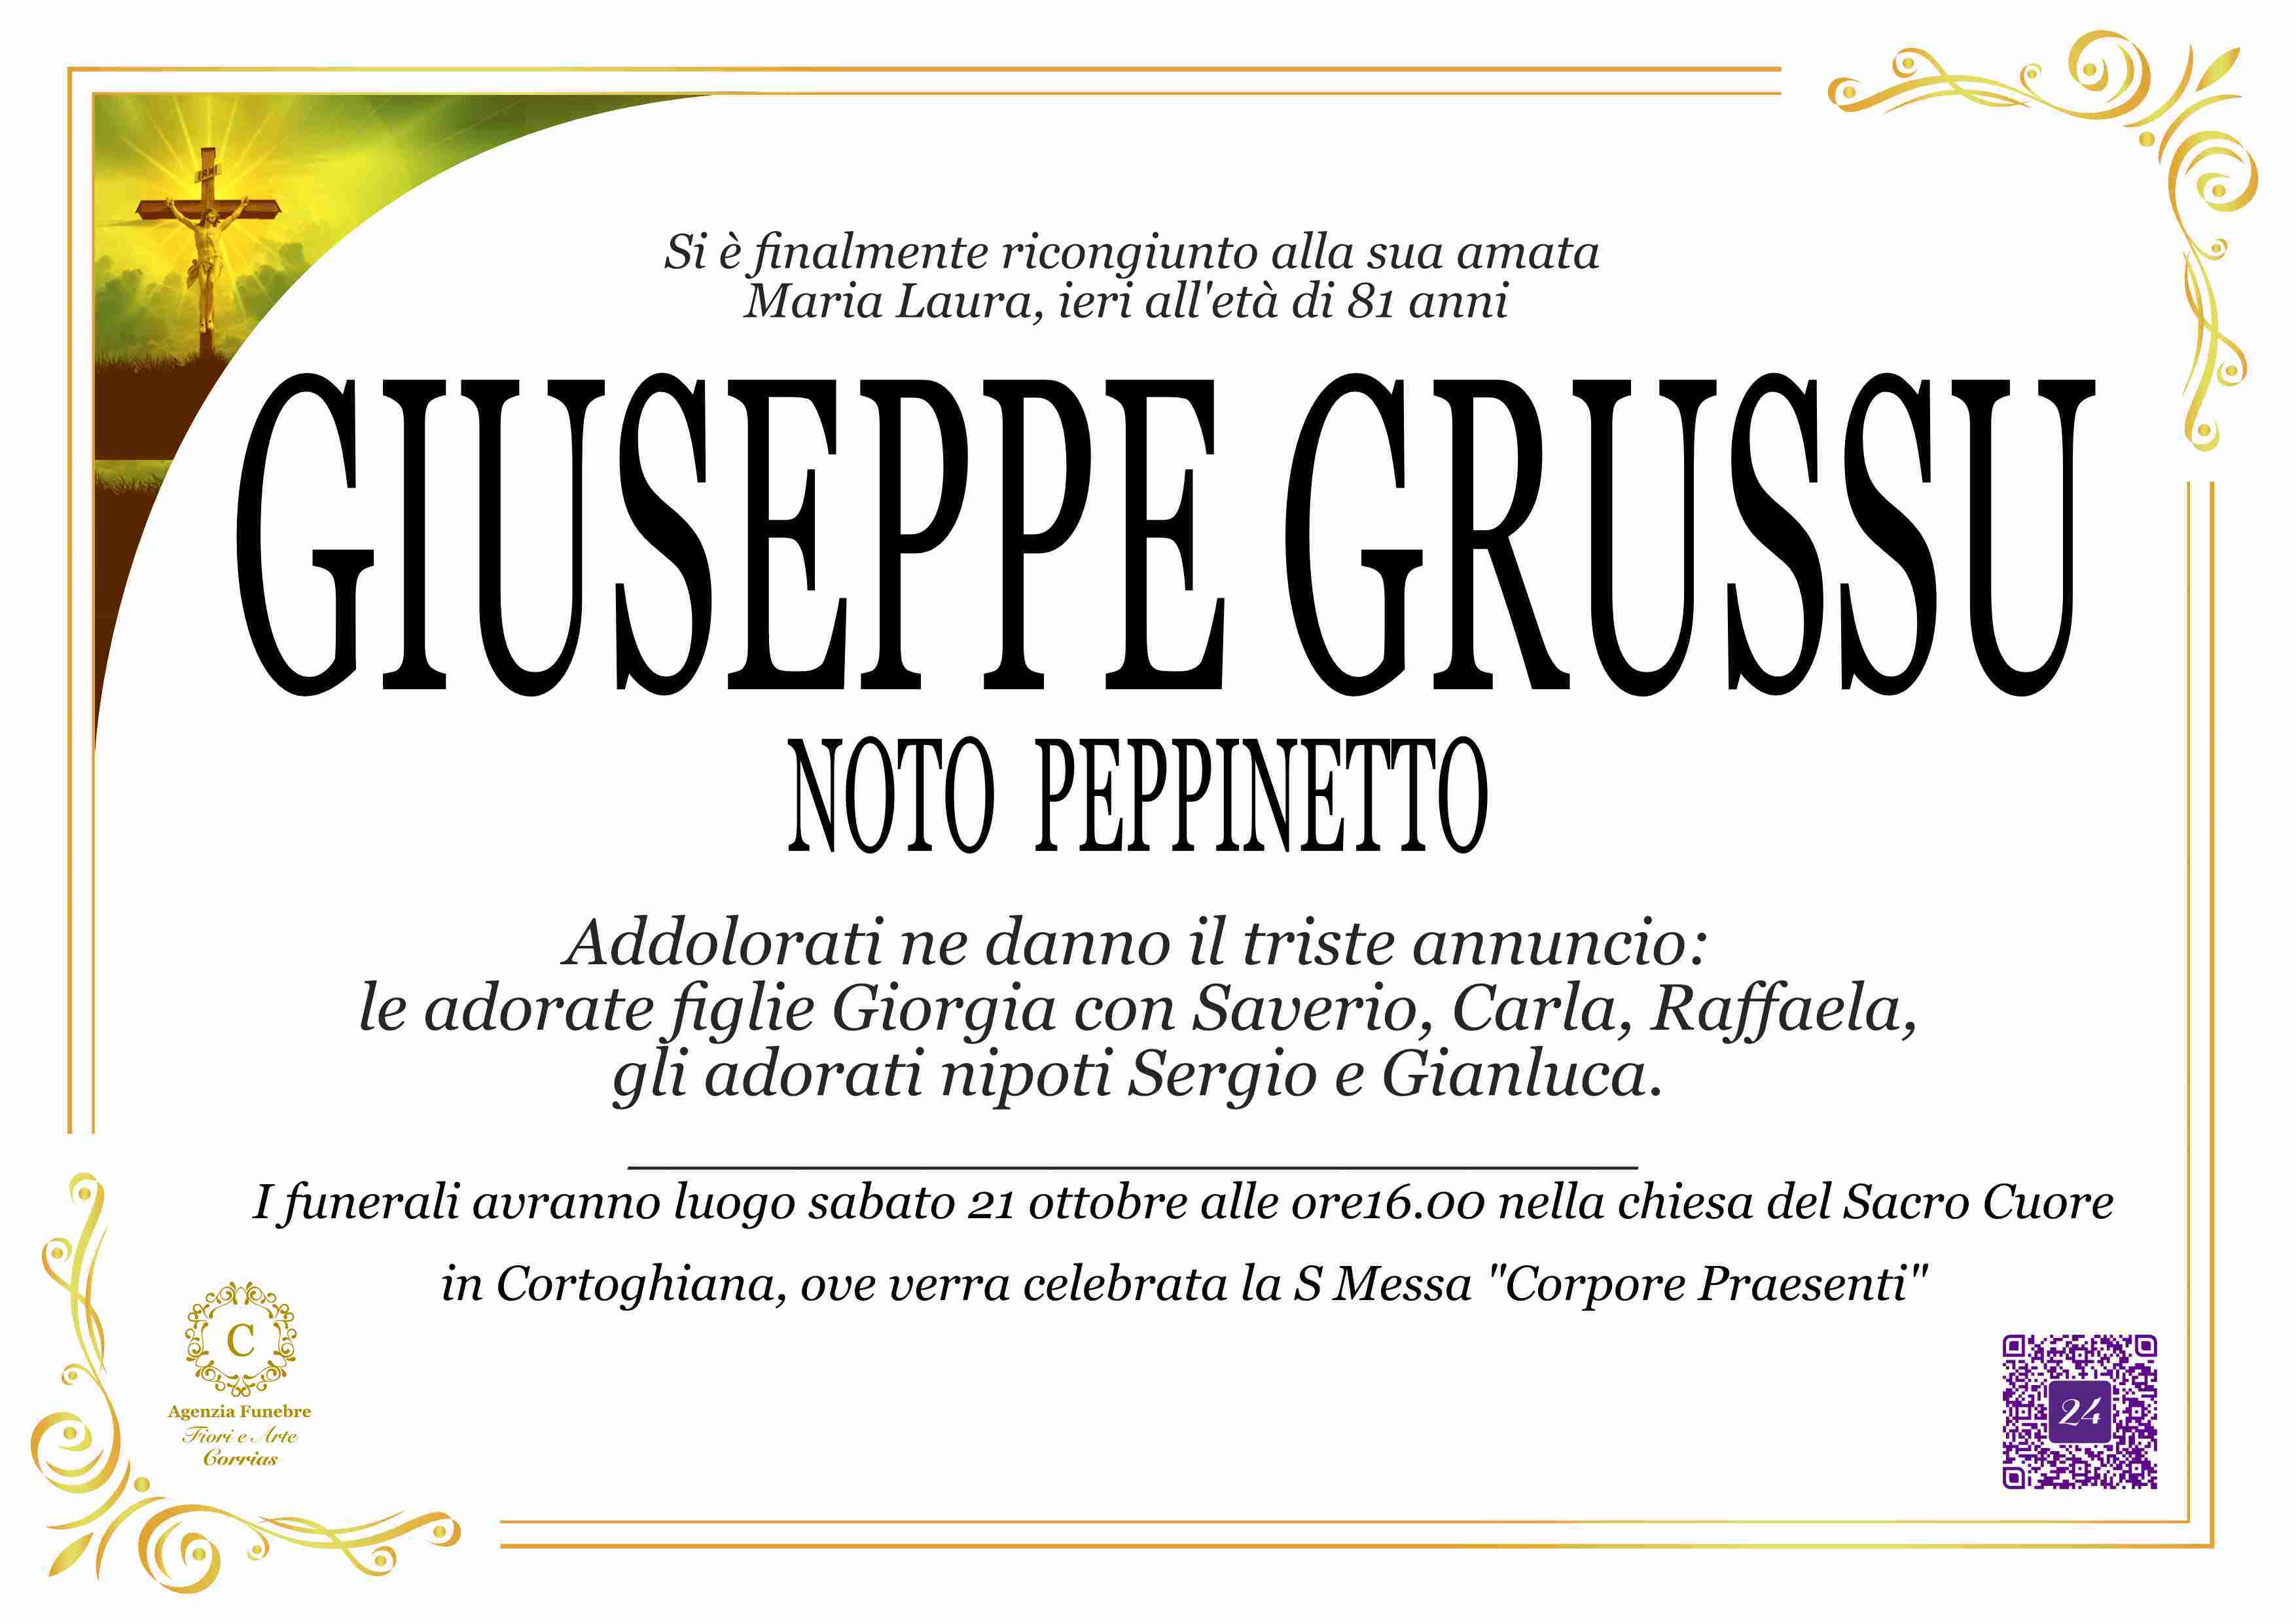 Giuseppe Grussu